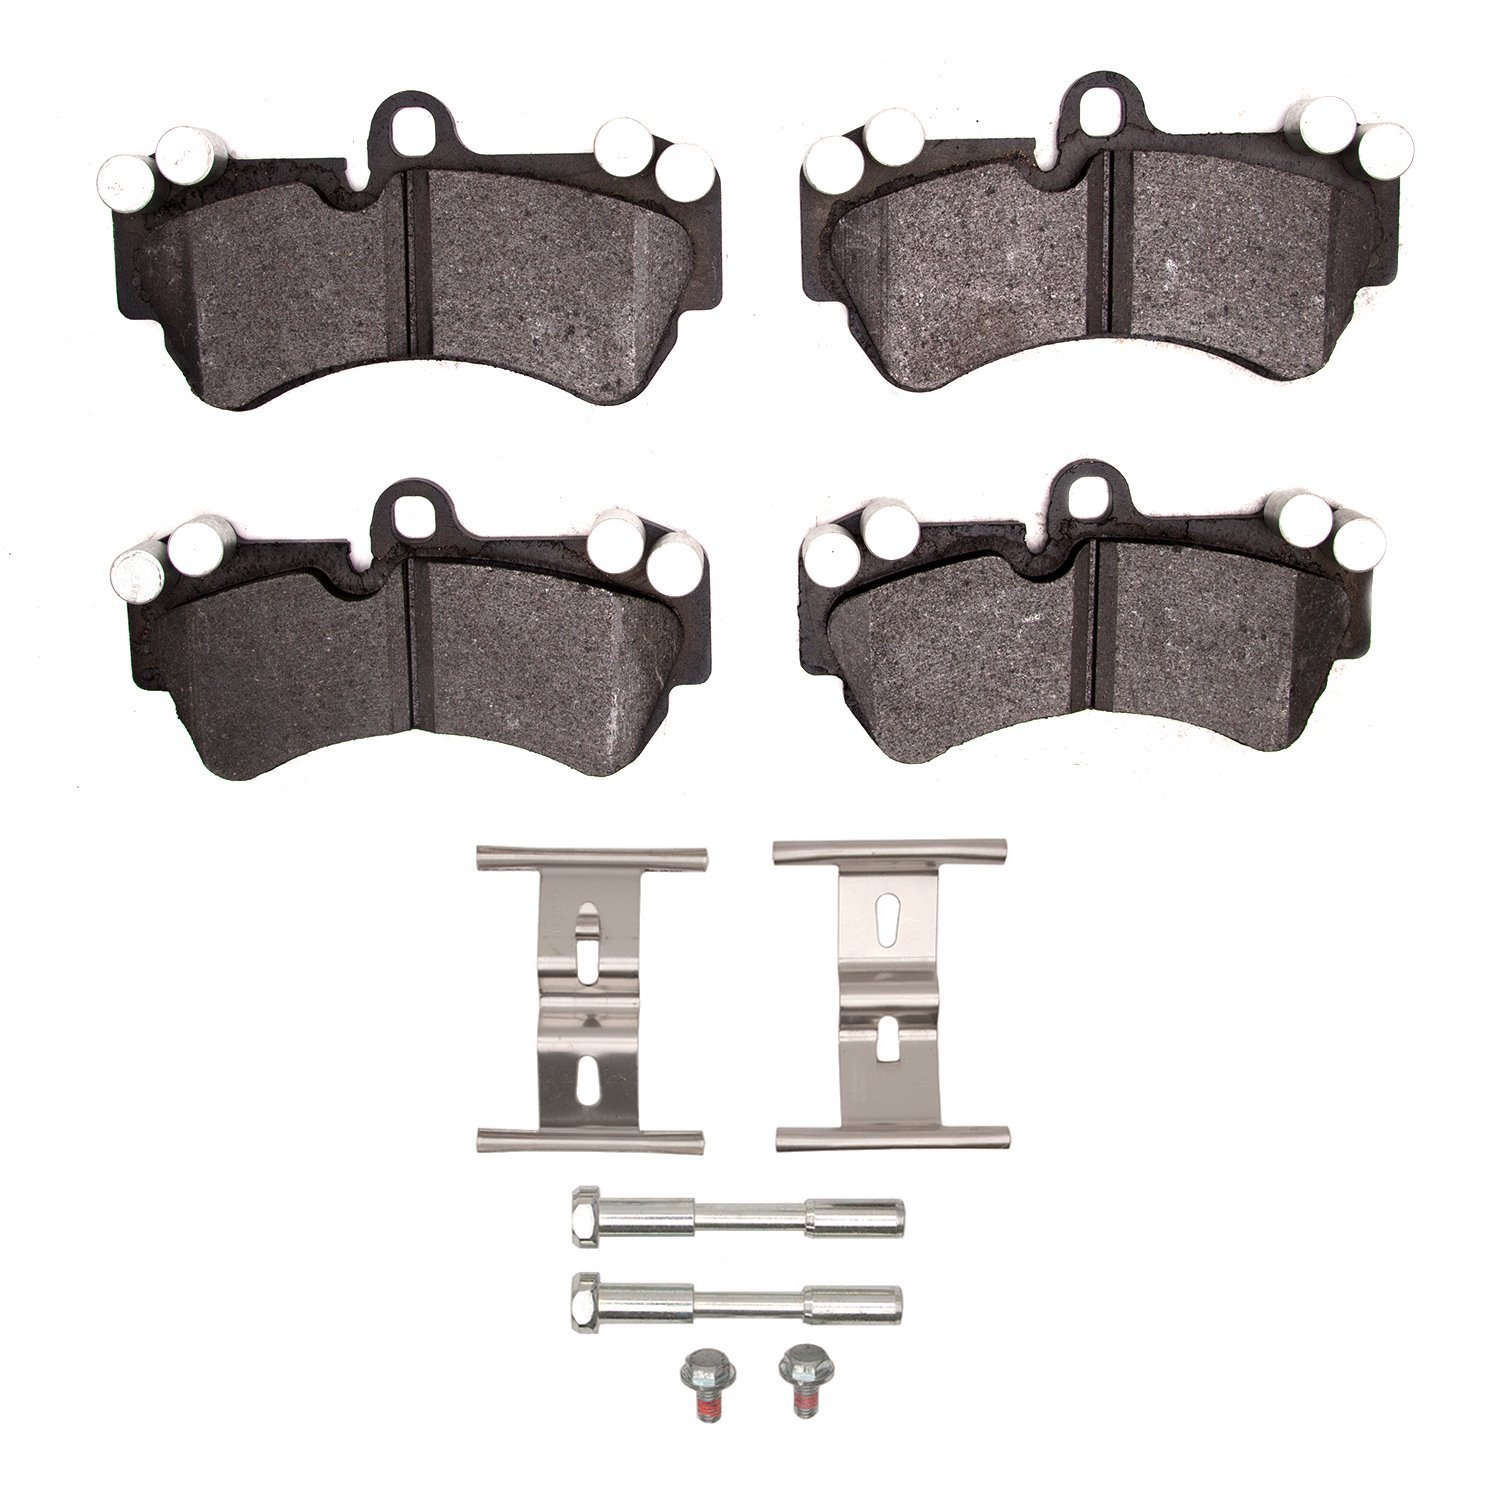 1551-1007-01 5000 Advanced Low-Metallic Brake Pads & Hardware Kit, 2003-2018 Multiple Makes/Models, Position: Front